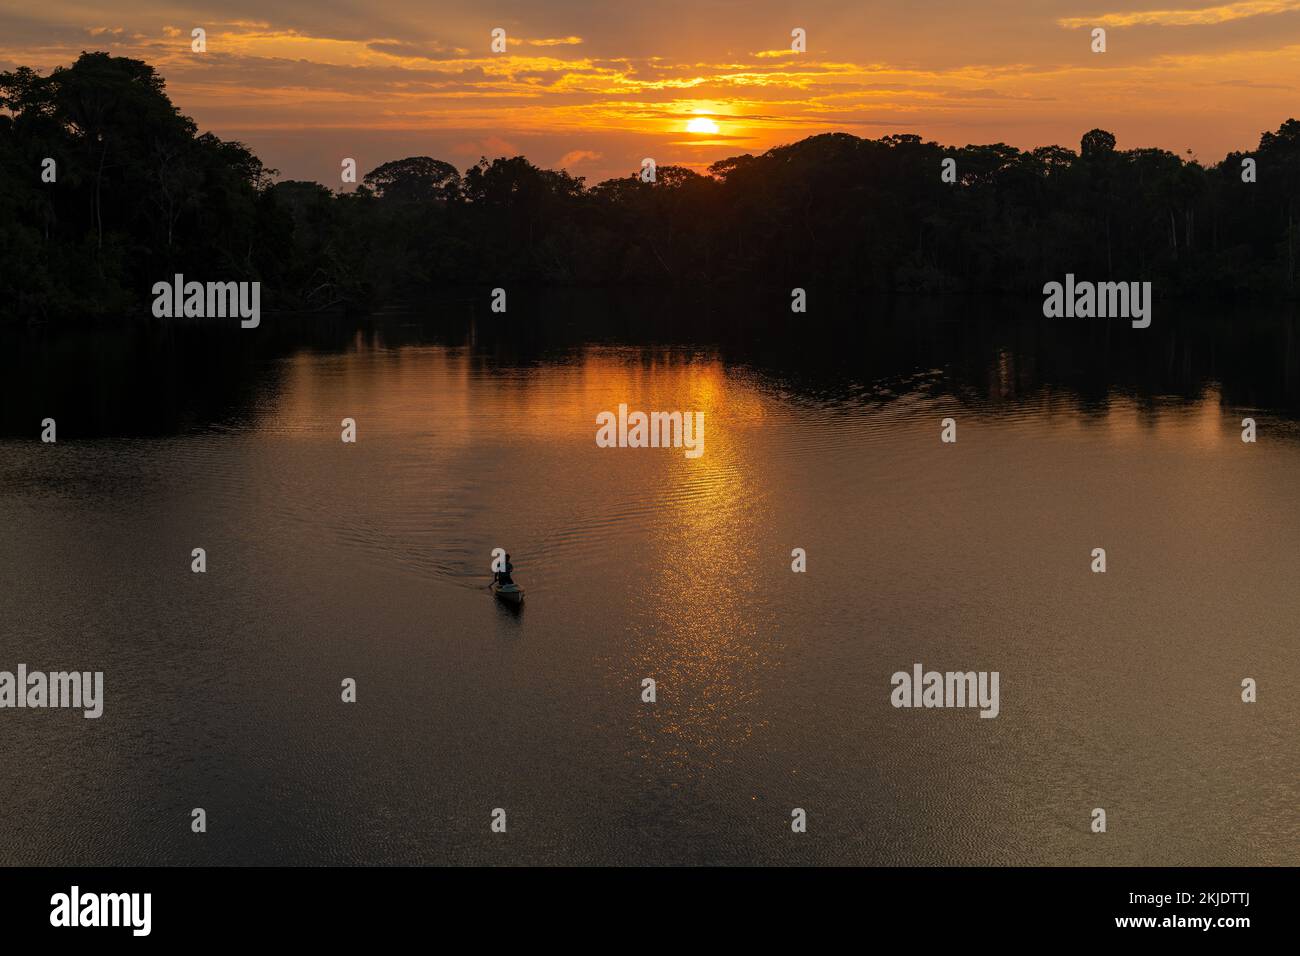 Man silhouette in canoe at sunrise, Amazon rainforest. Amazon river basin in Brazil, Peru, Ecuador, Bolivia, Guyana, Venezuela, Colombia, Suriname. Stock Photo